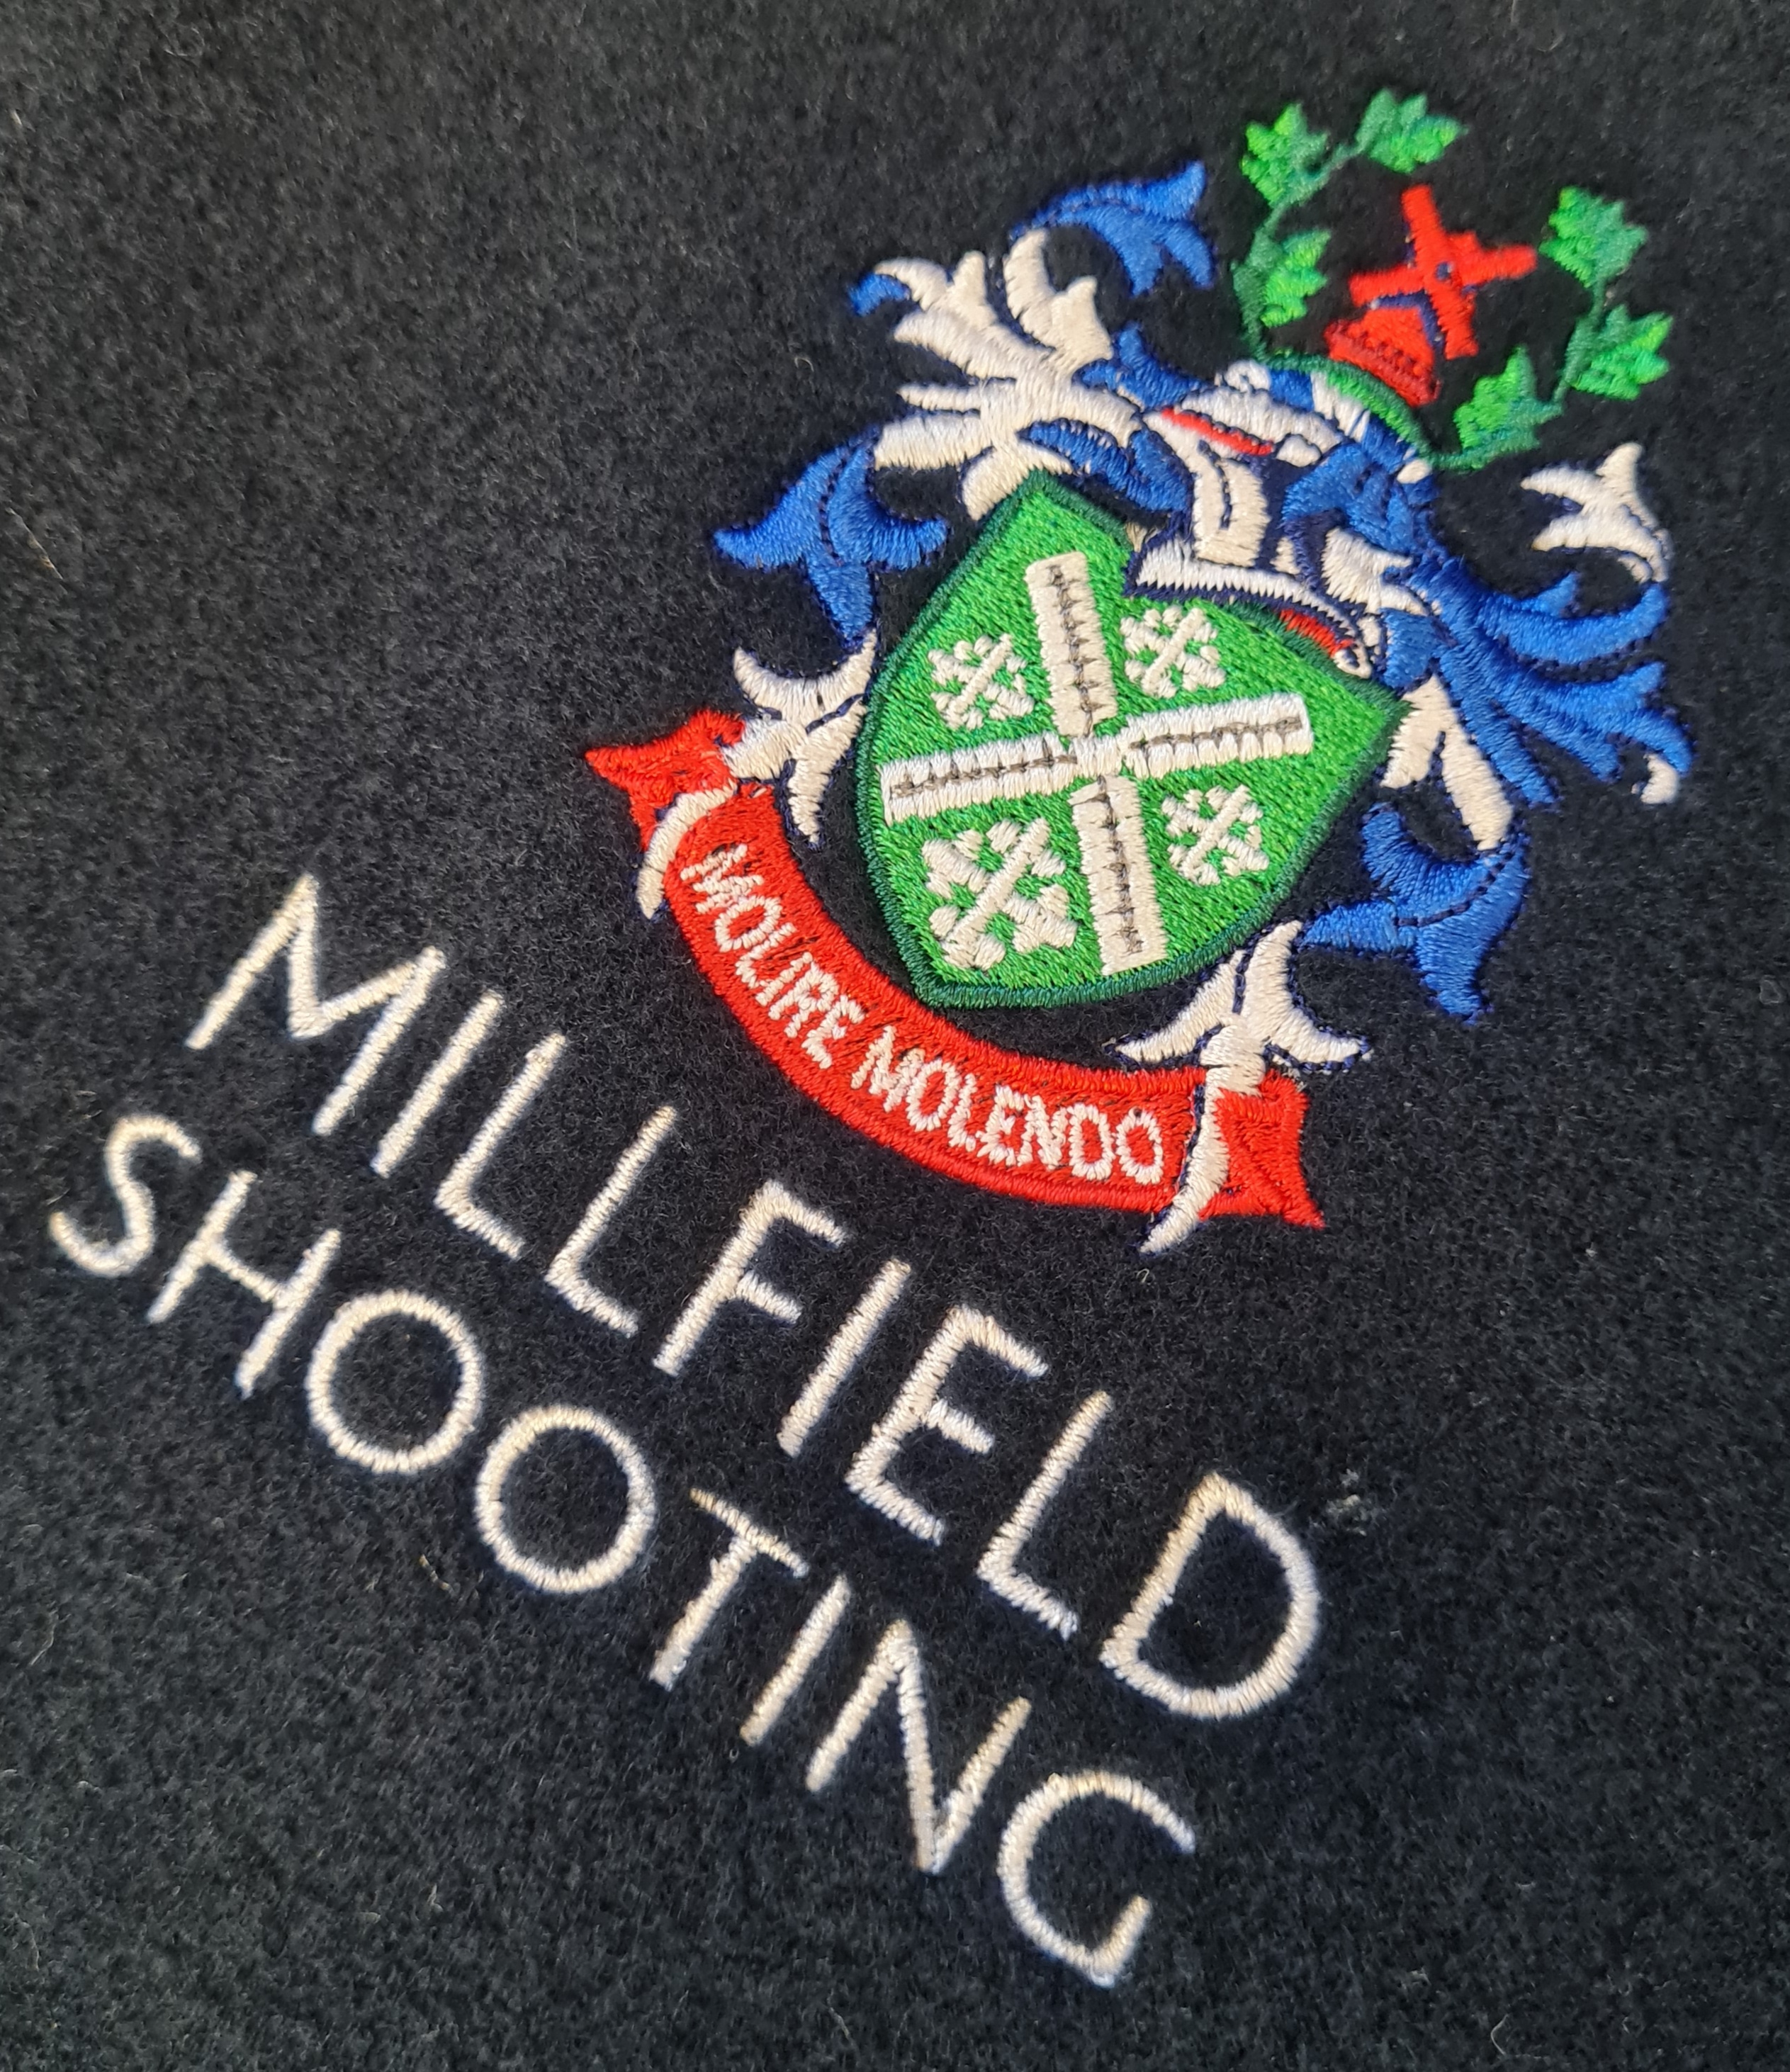 Millfield Shooting